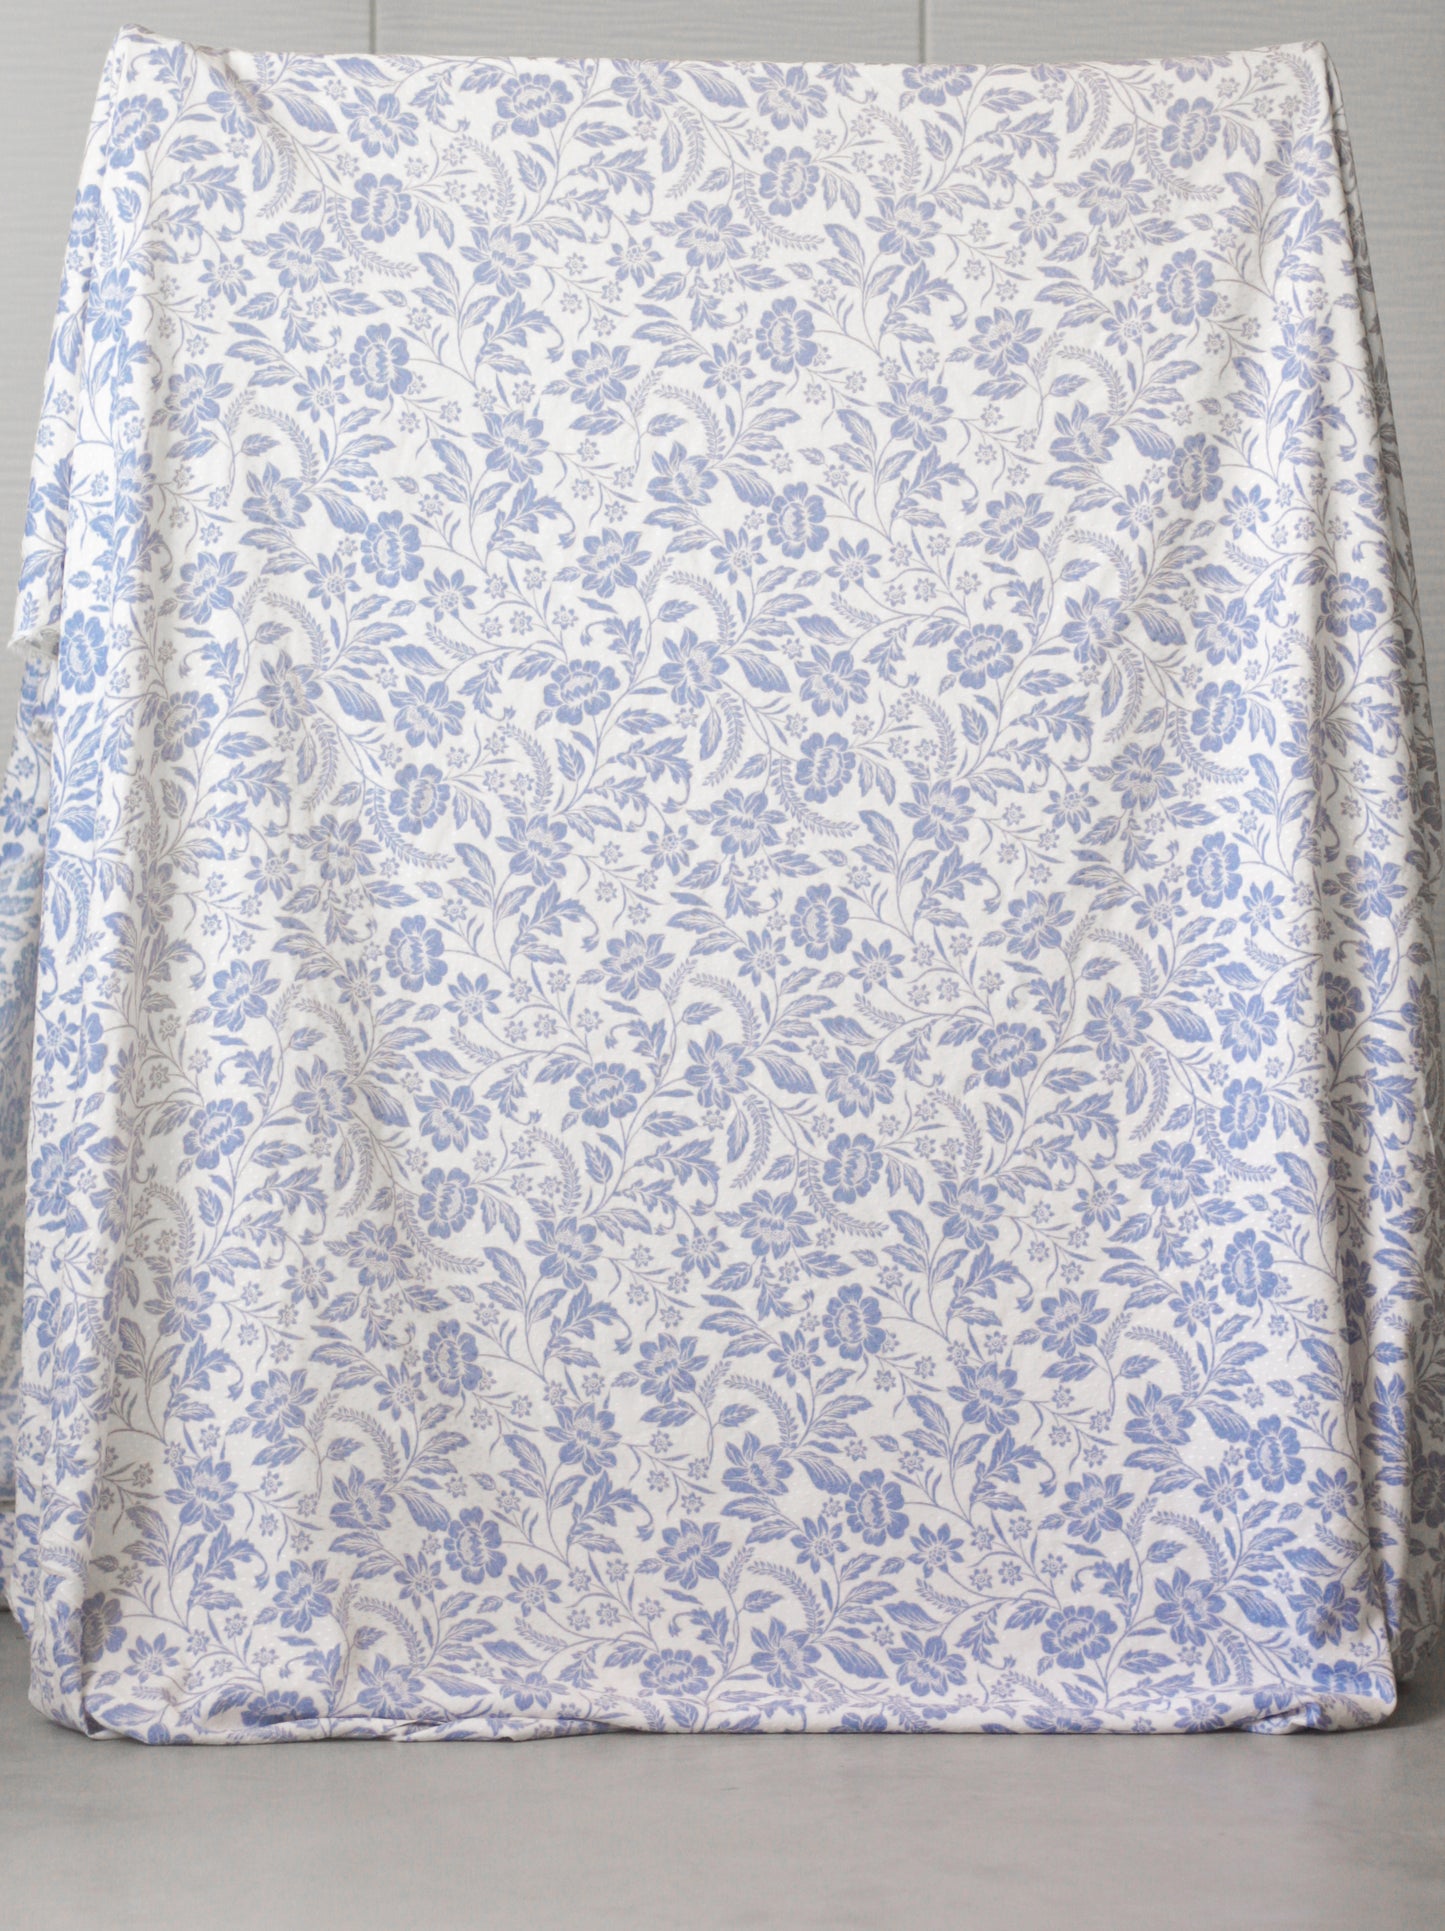 Textured Rayon Challis - Light Blue Floral (1/2 yard)